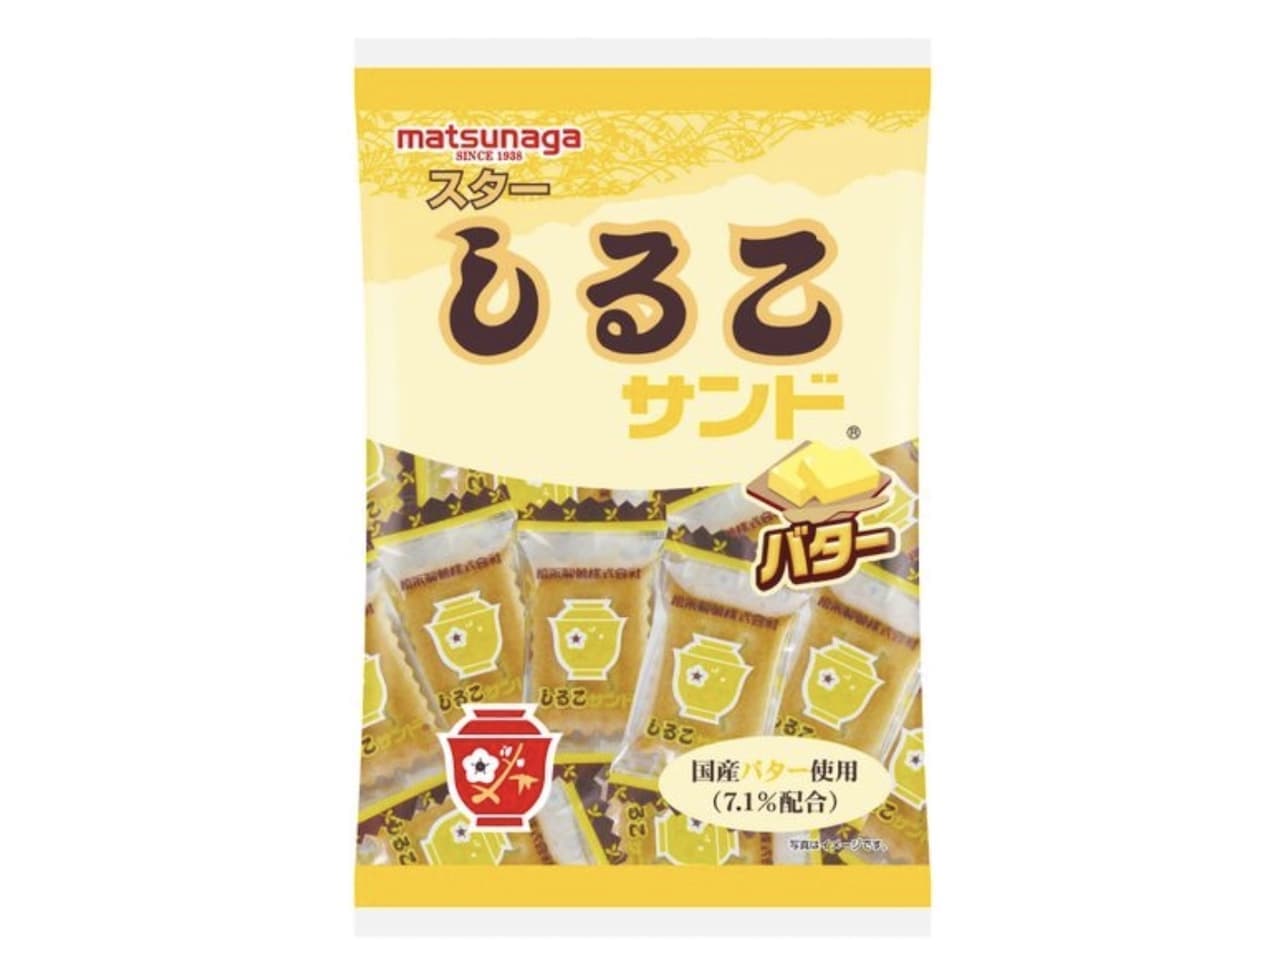 Matsunaga Seika "Shiruko Sand Butter